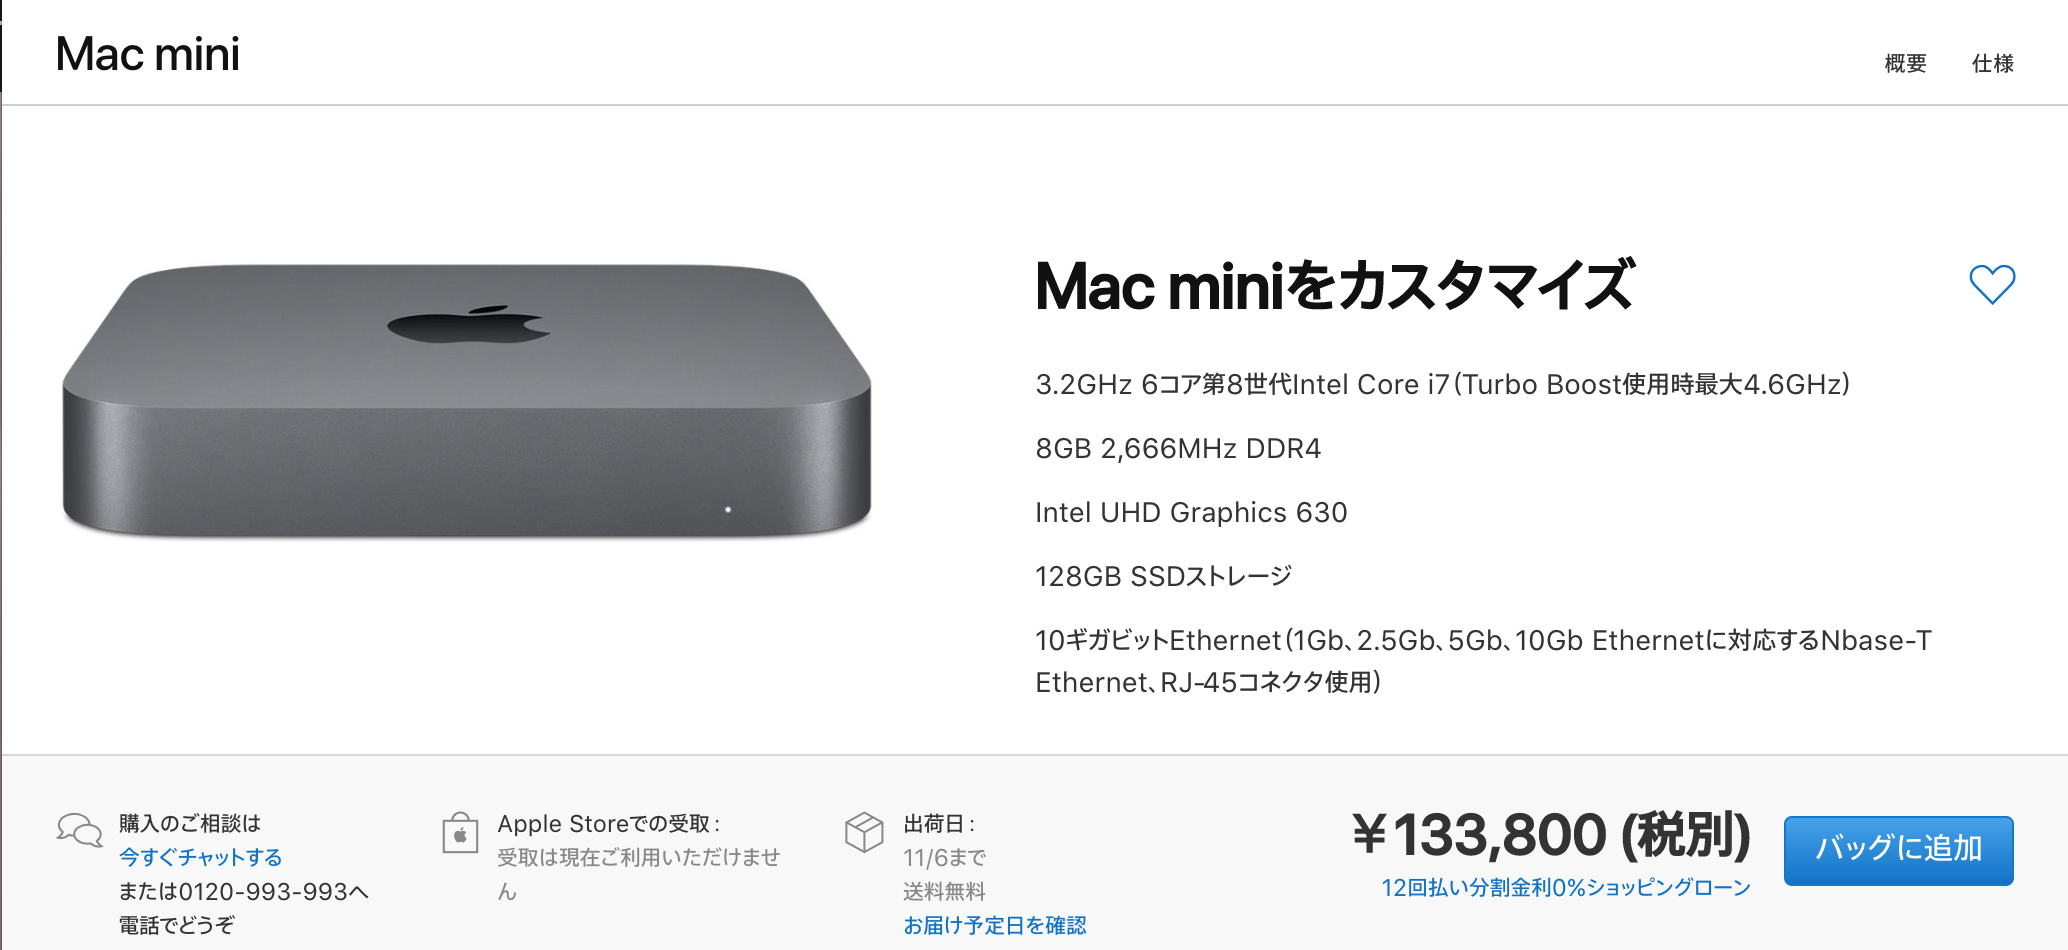 Mac mini2018 i7/512GB/16GB/10Gb Ethernet